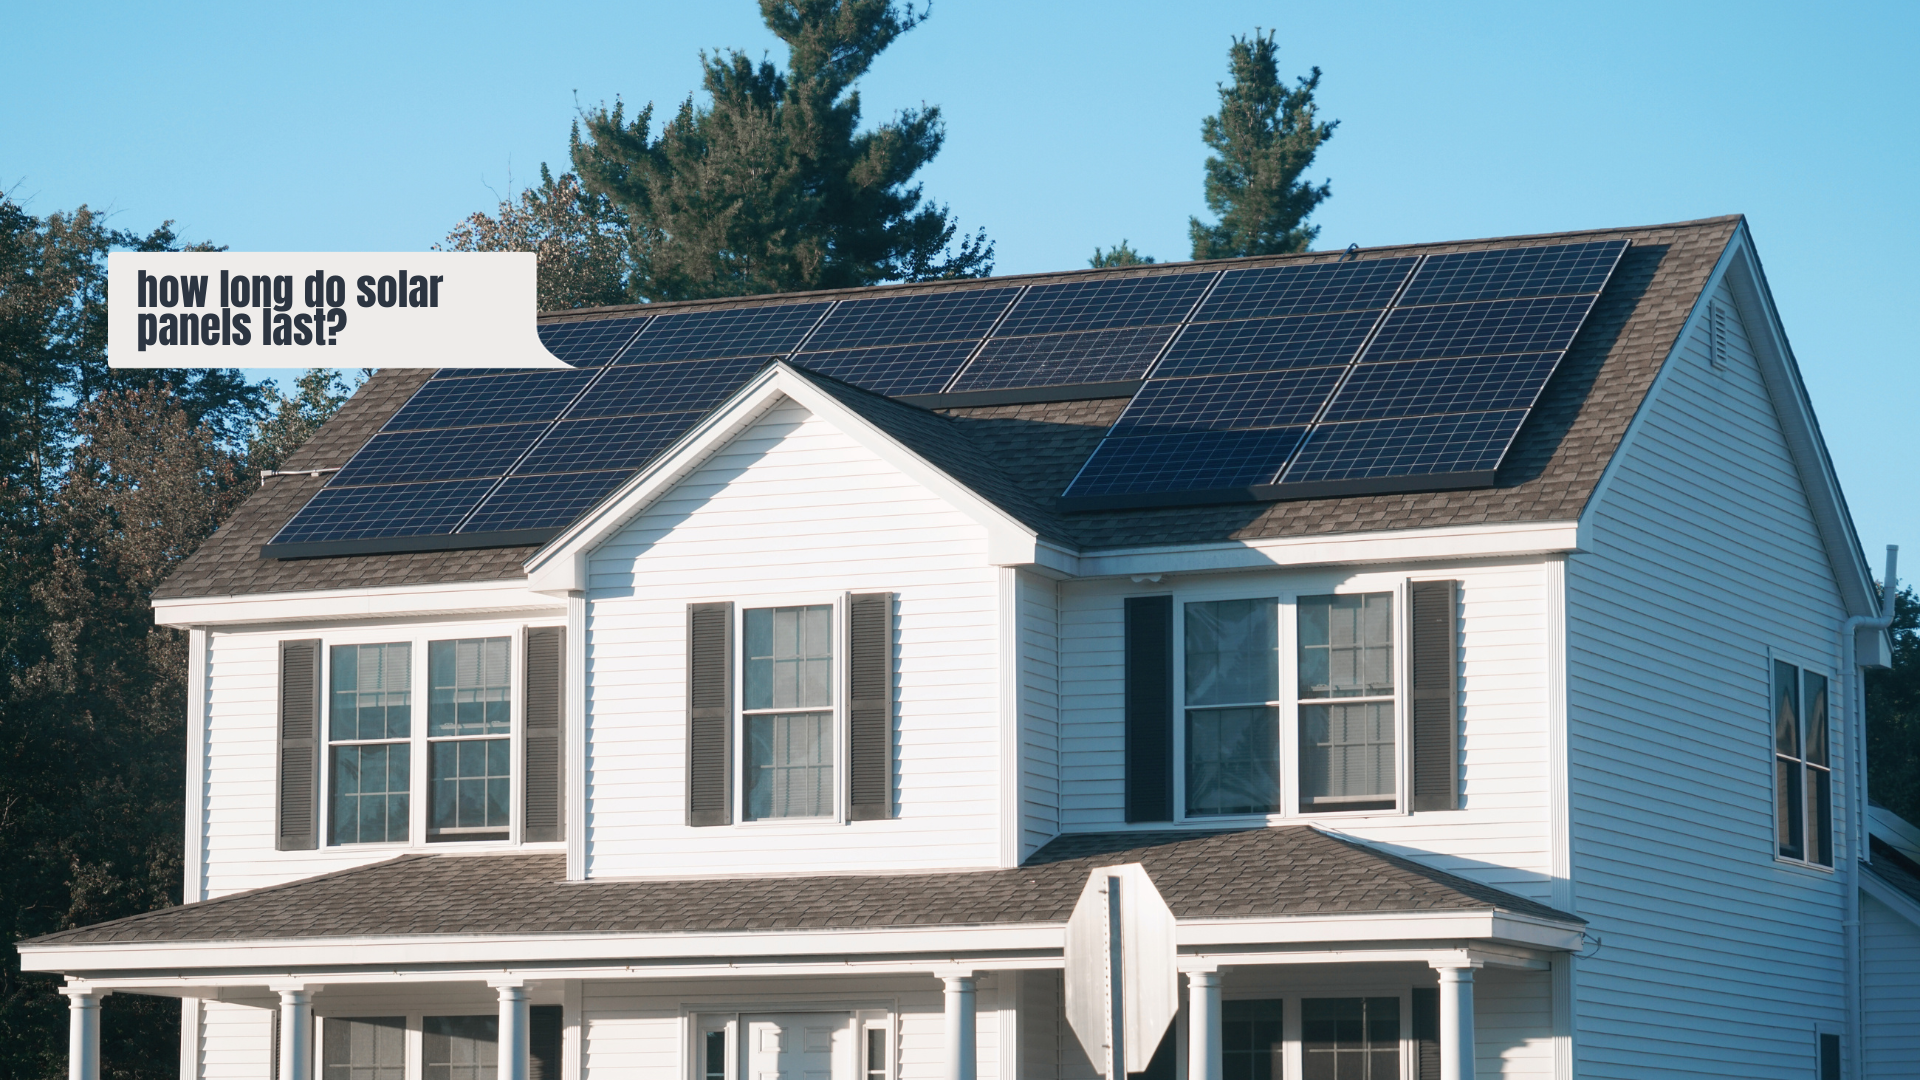 Solar panels installed on residential roof